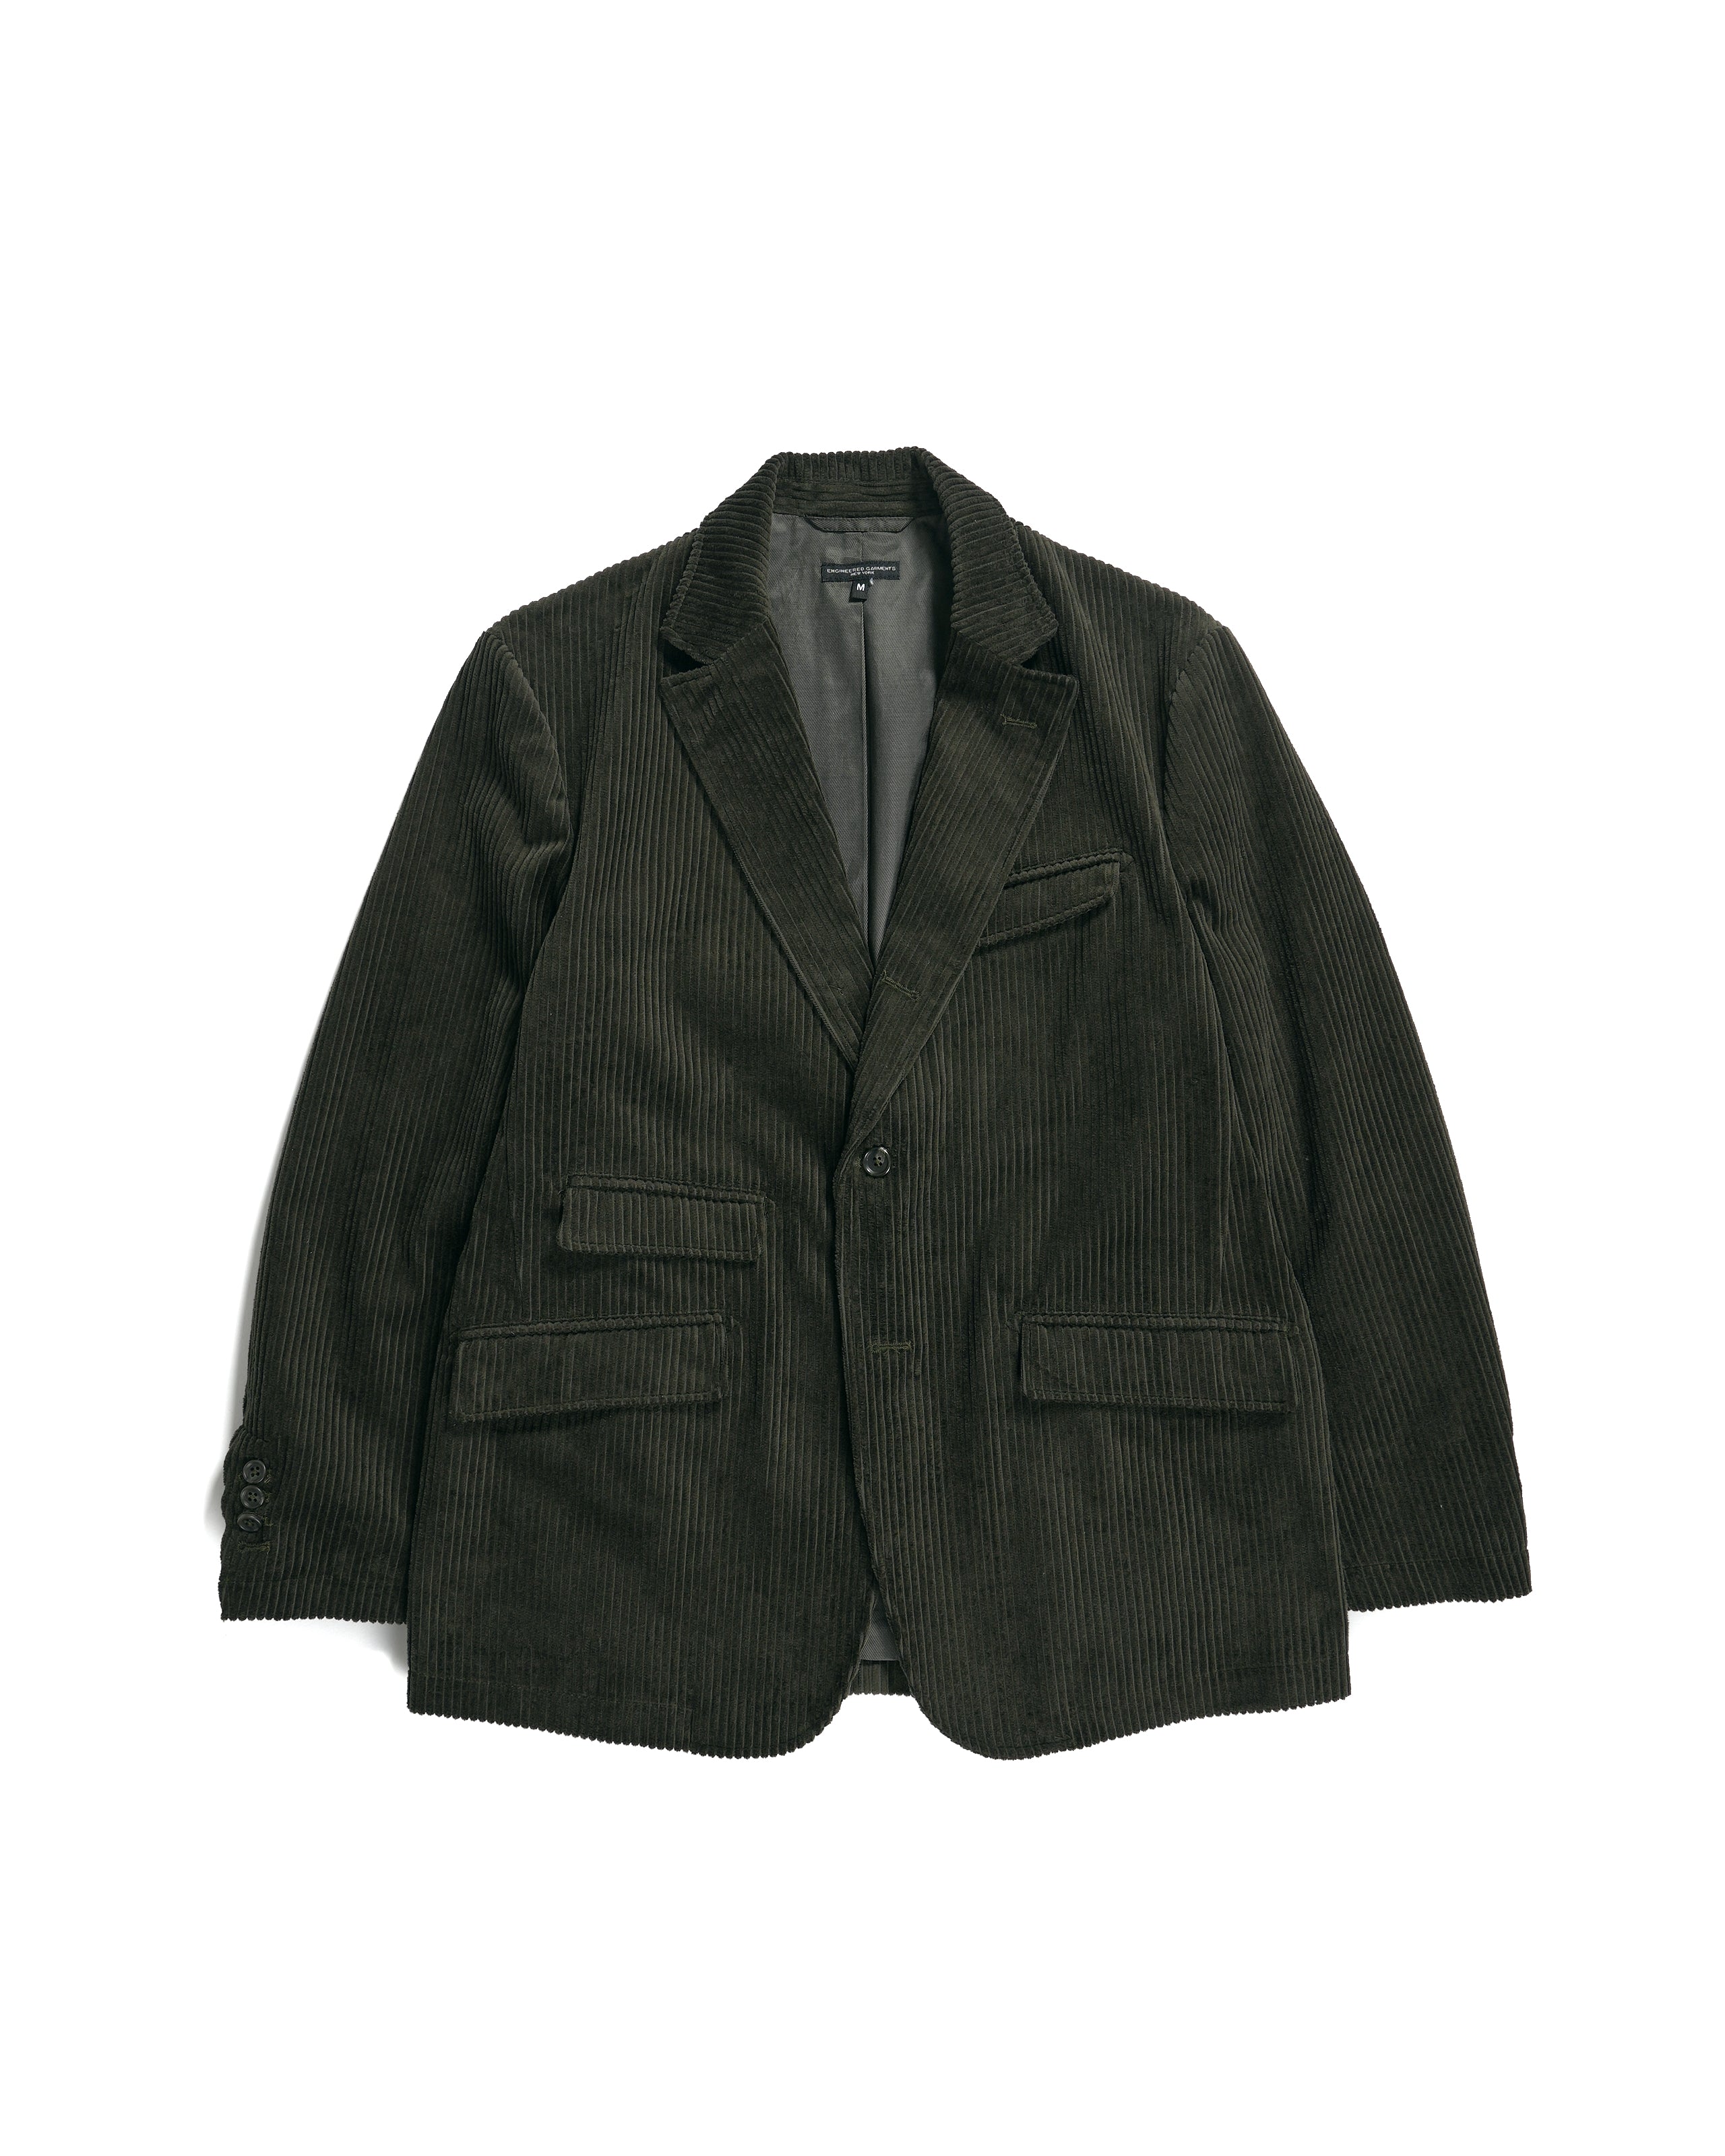 Engineered Garments Andover Jacket - Olive Cotton 4.5W Corduroy